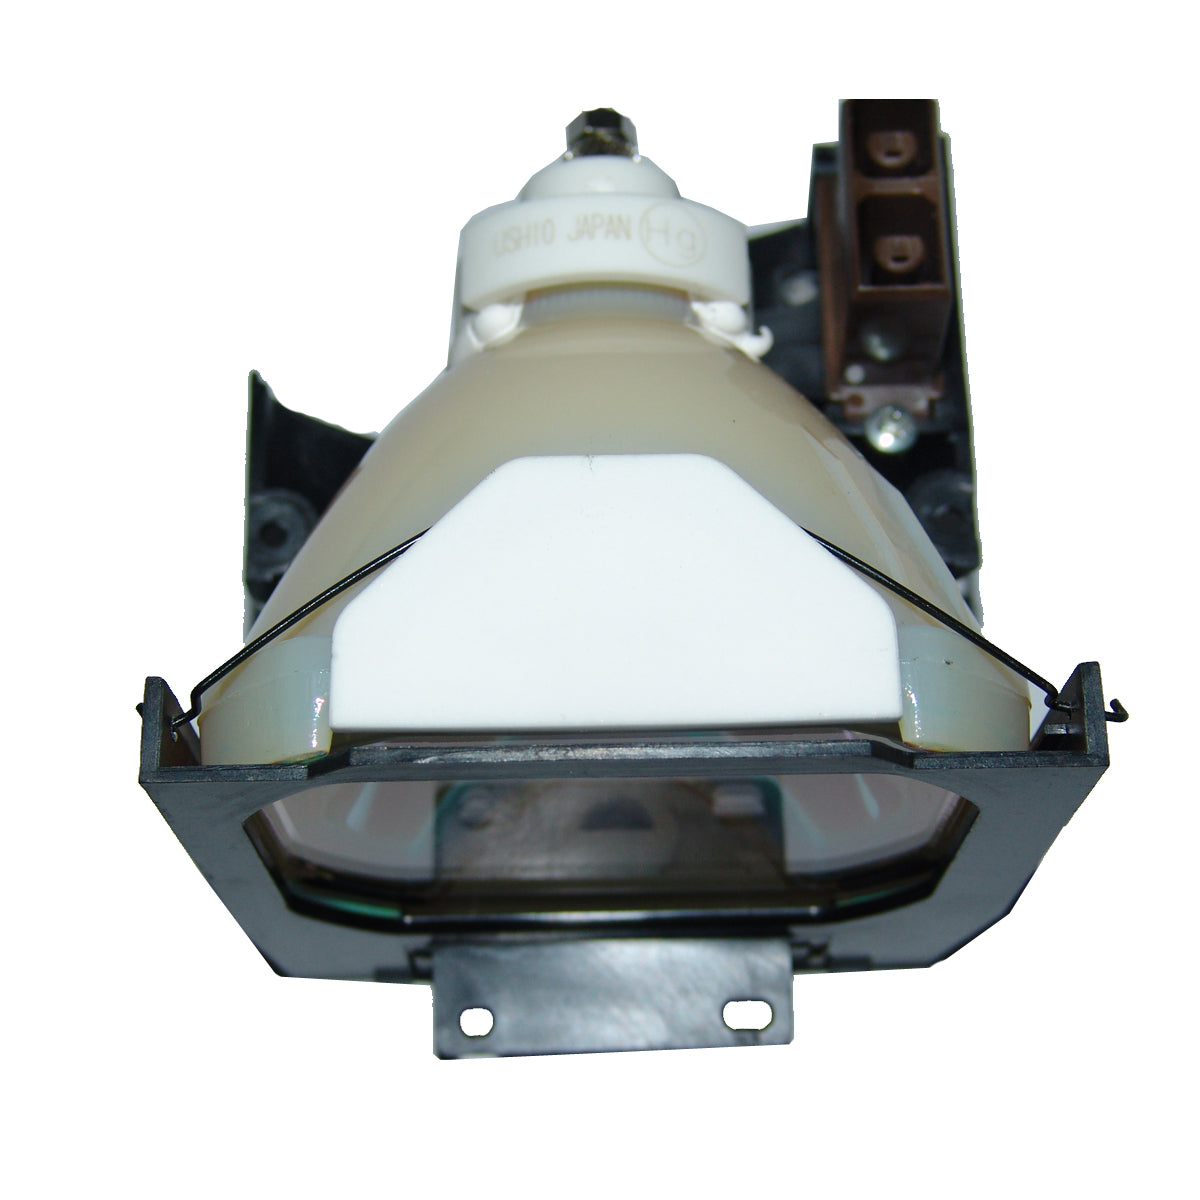 Dukane VLT-X120LP Ushio Projector Lamp Module